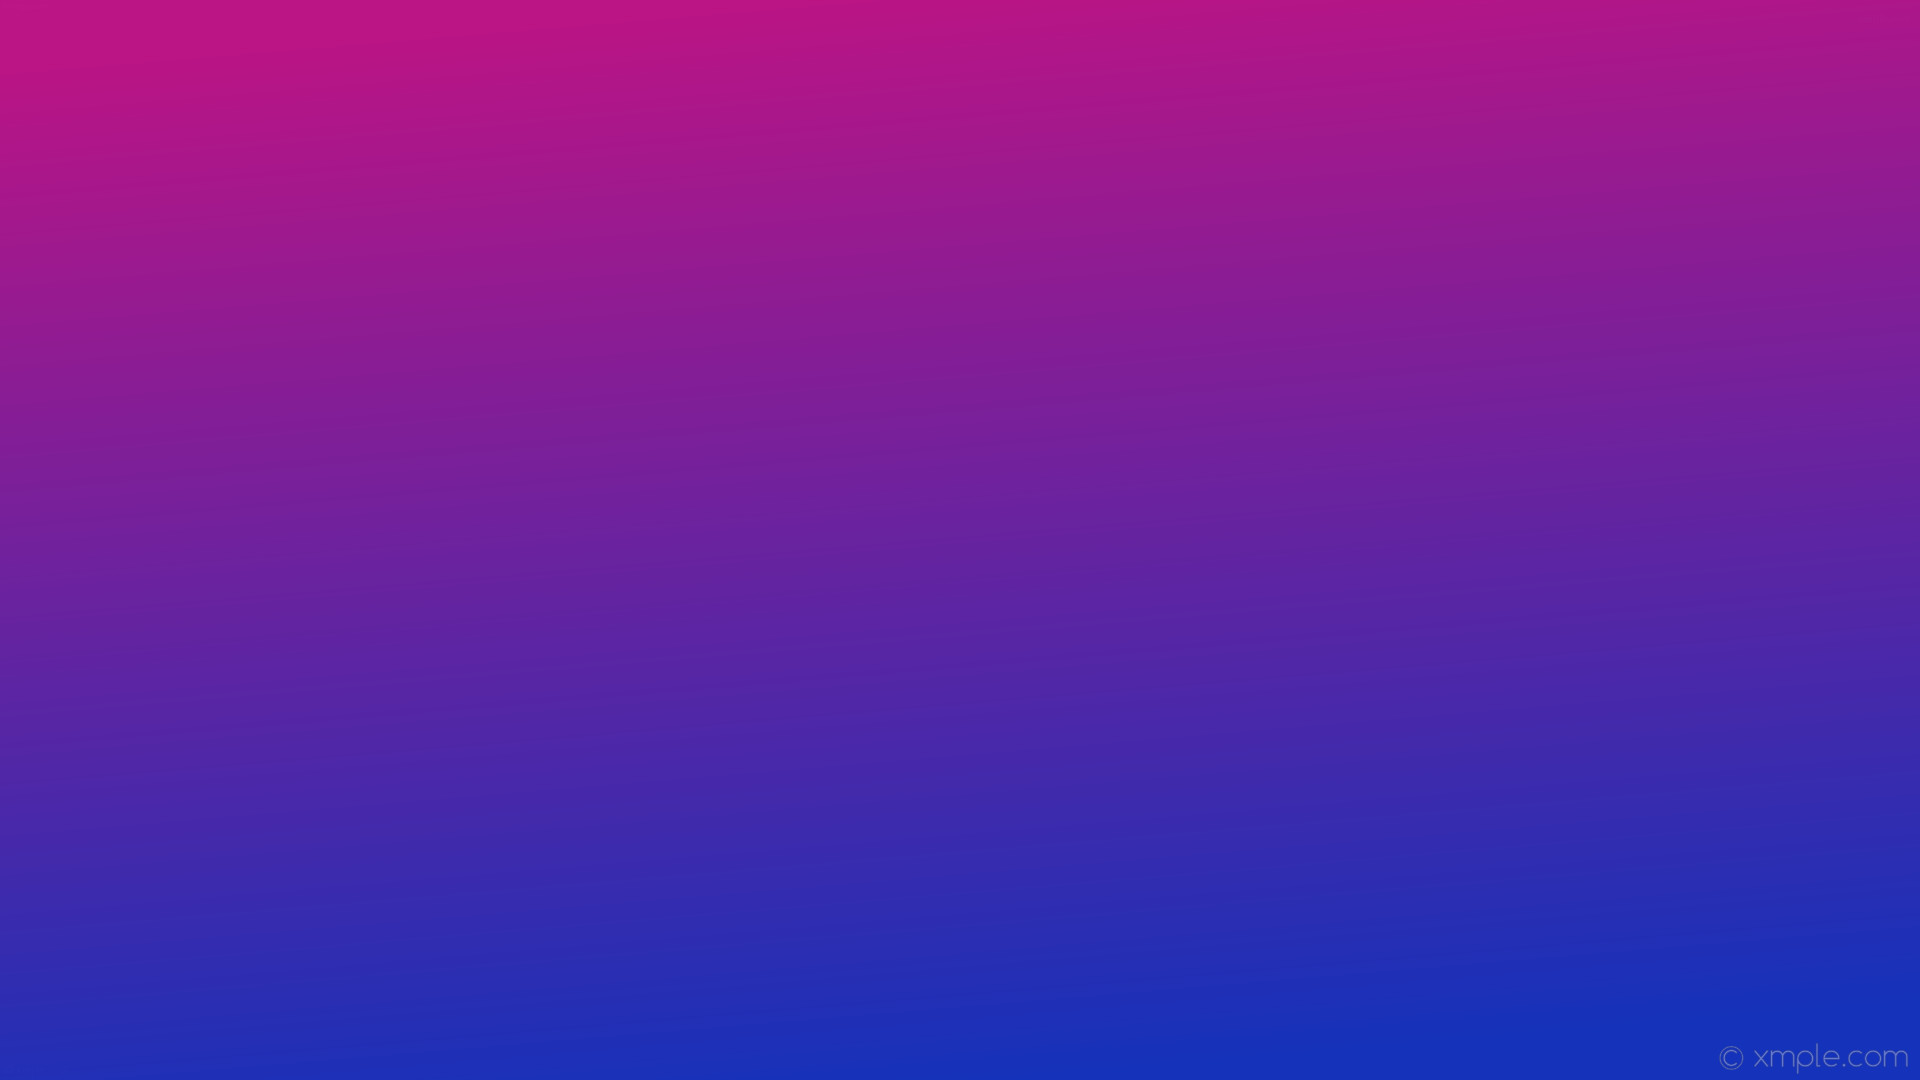 Wallpaper linear pink gradient blue ba #ba1485 285